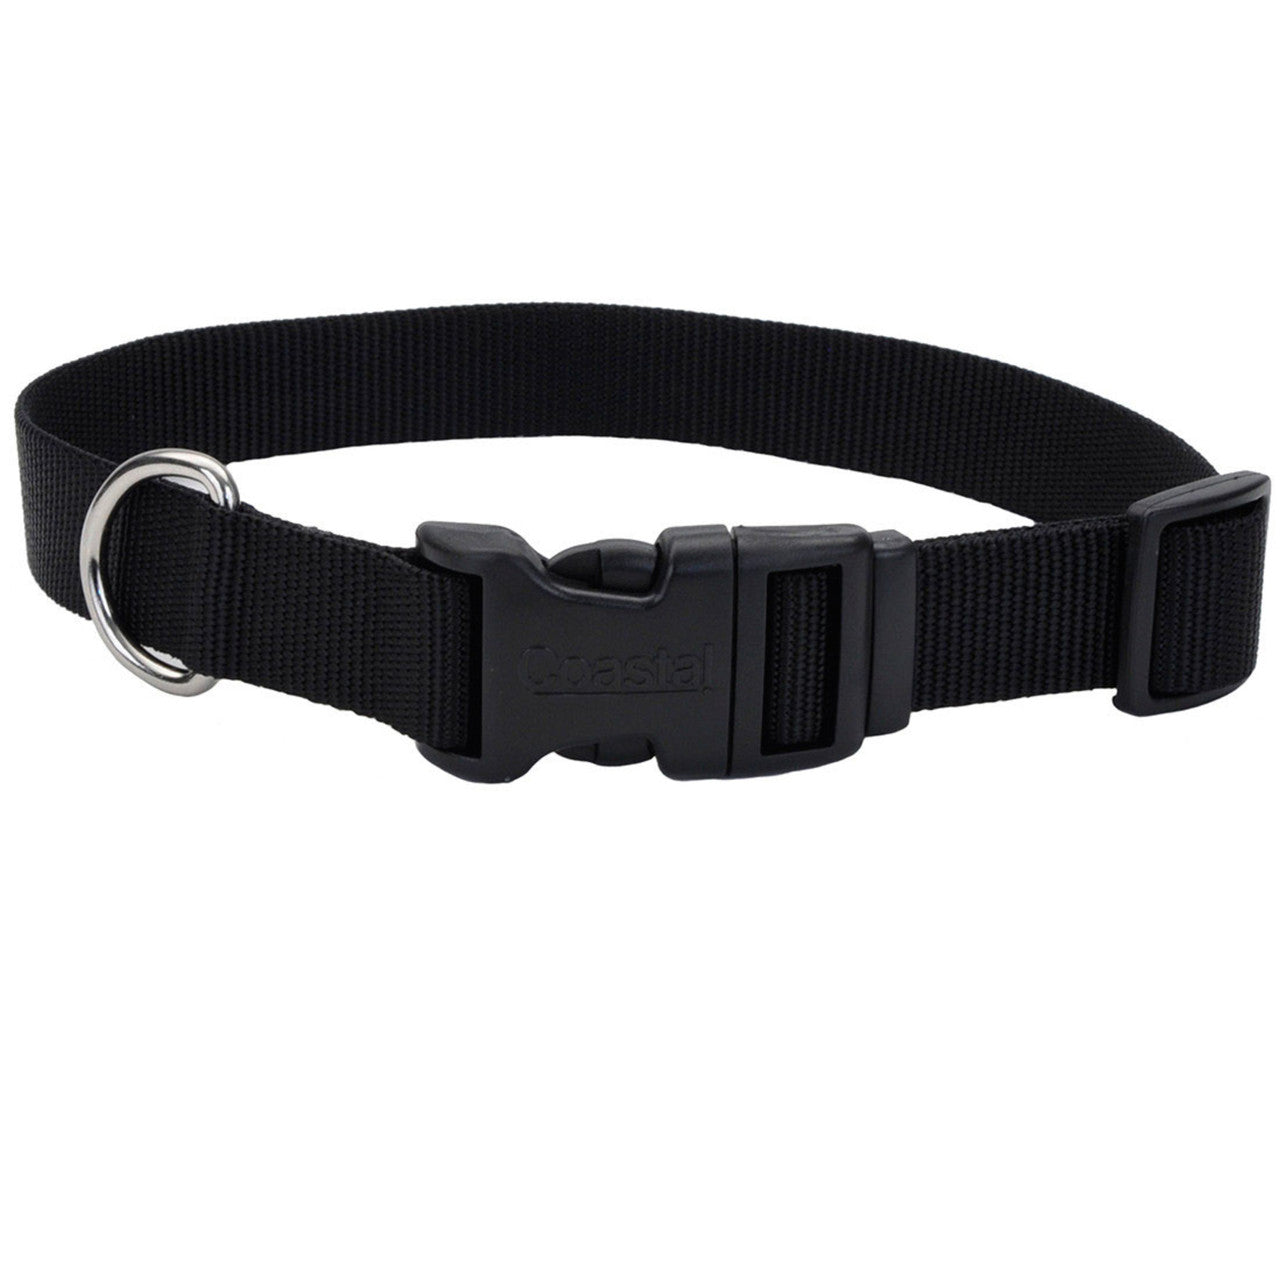 Coastal Adjustable Nylon Dog Collar with Plastic Buckle Black 3/4 in x 14-20 in